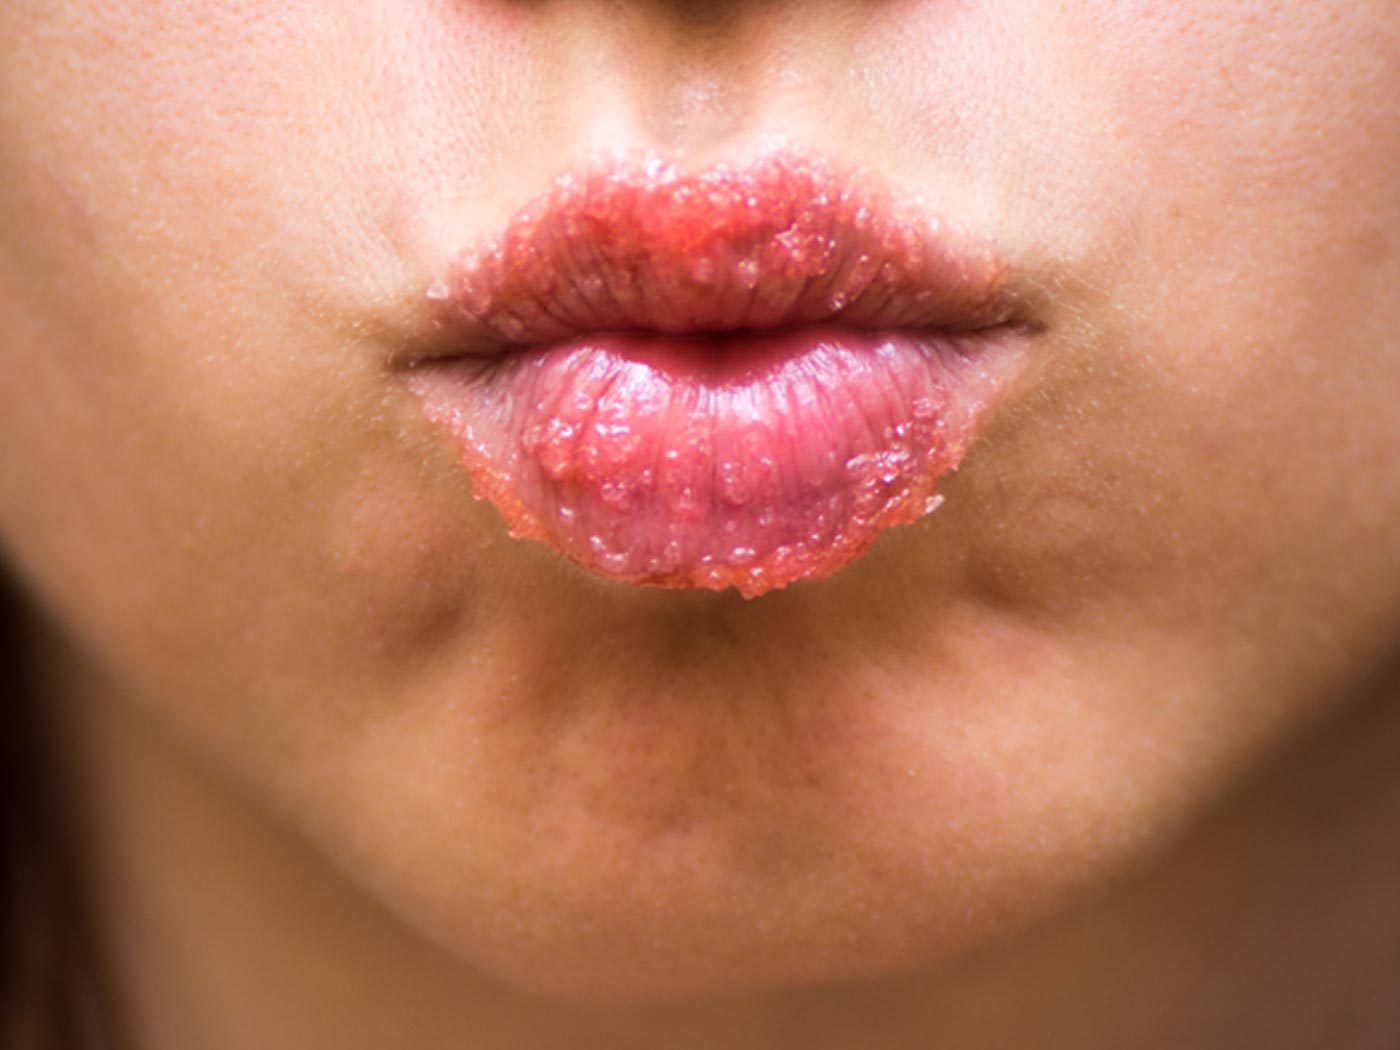 How to exfoliate lips